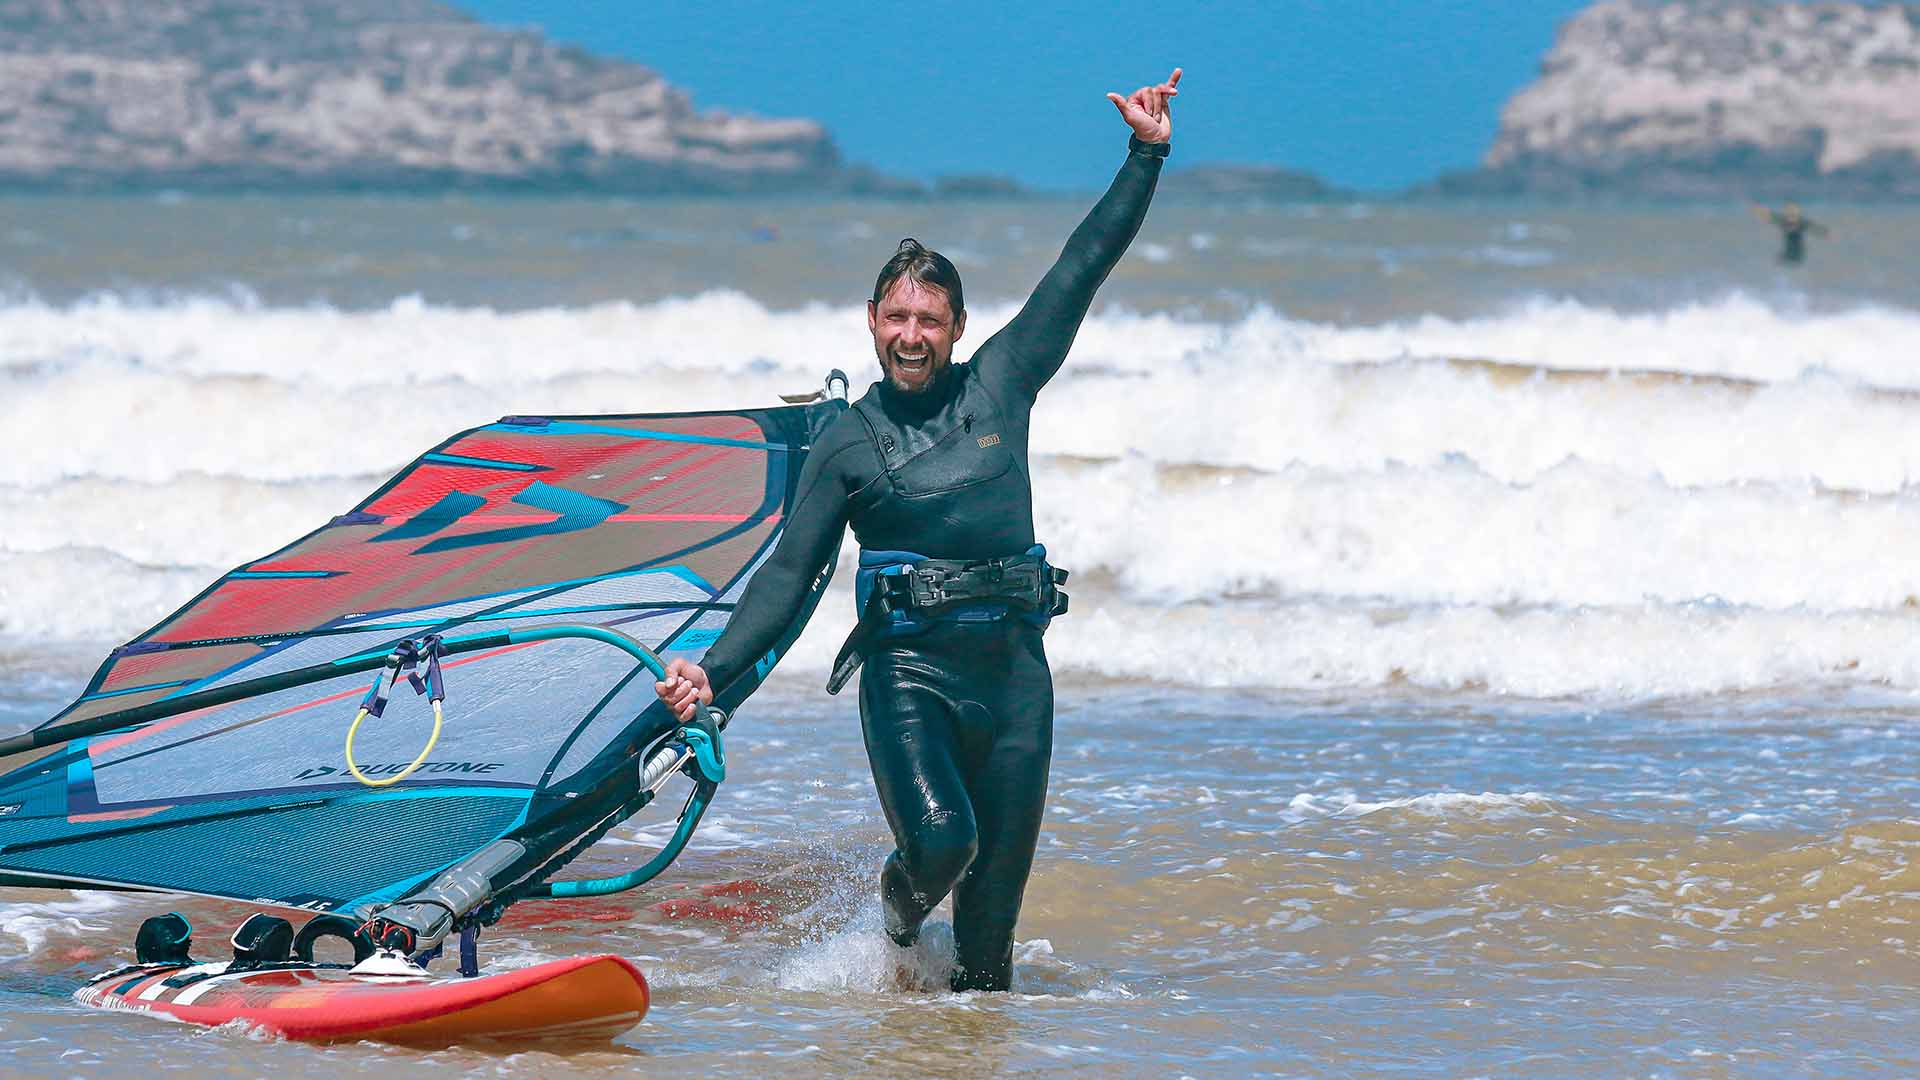 windsurf guy who's smiling on the ocean